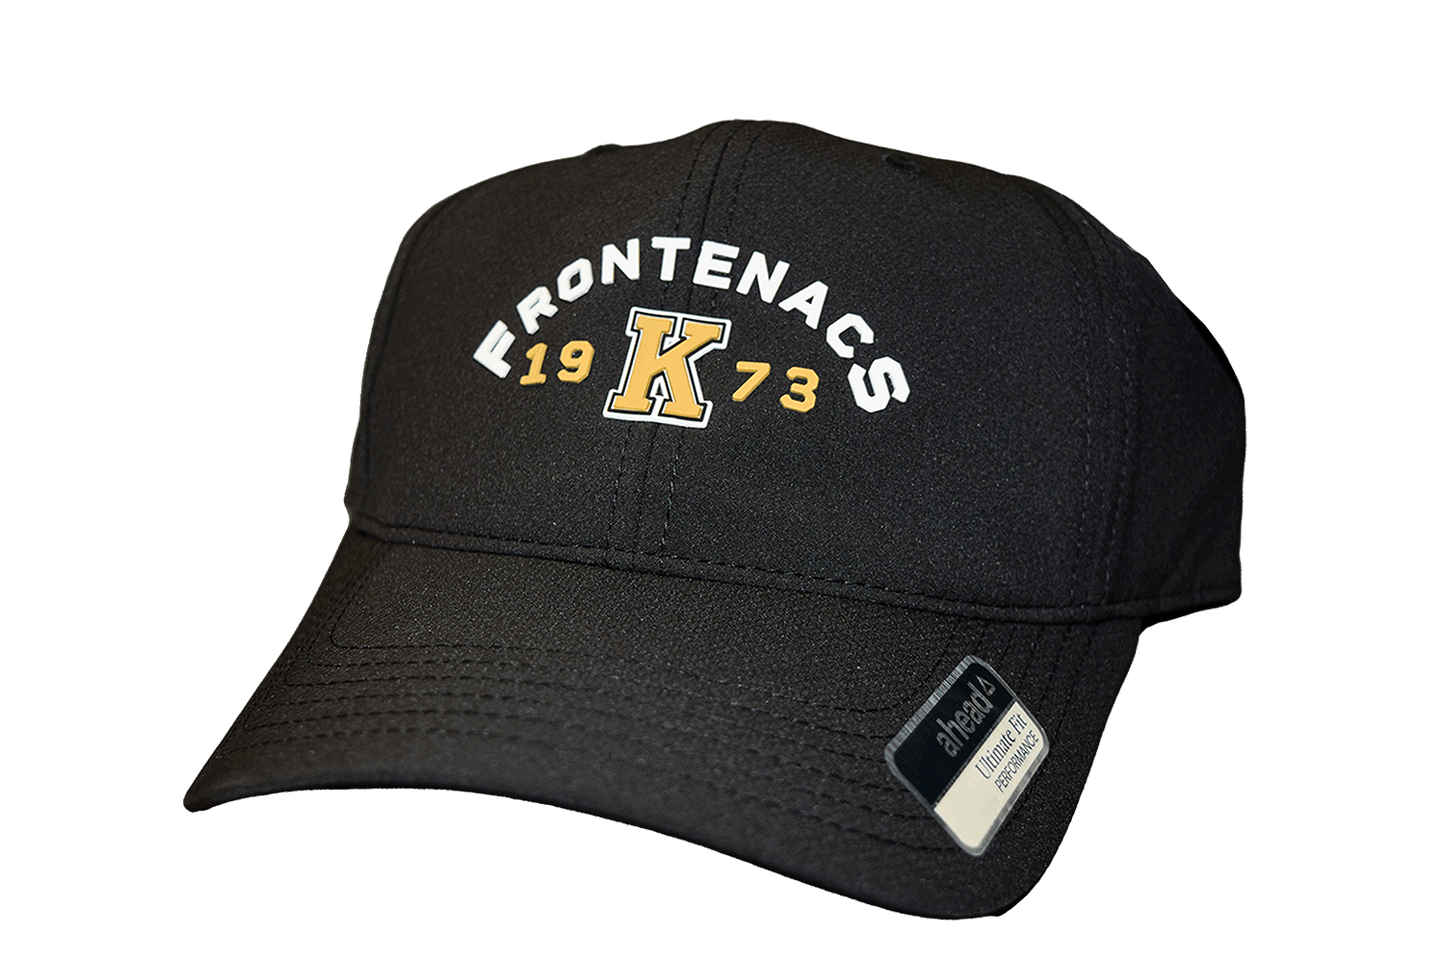 Kingston Frontenacs 1973 Performance Fit Hat